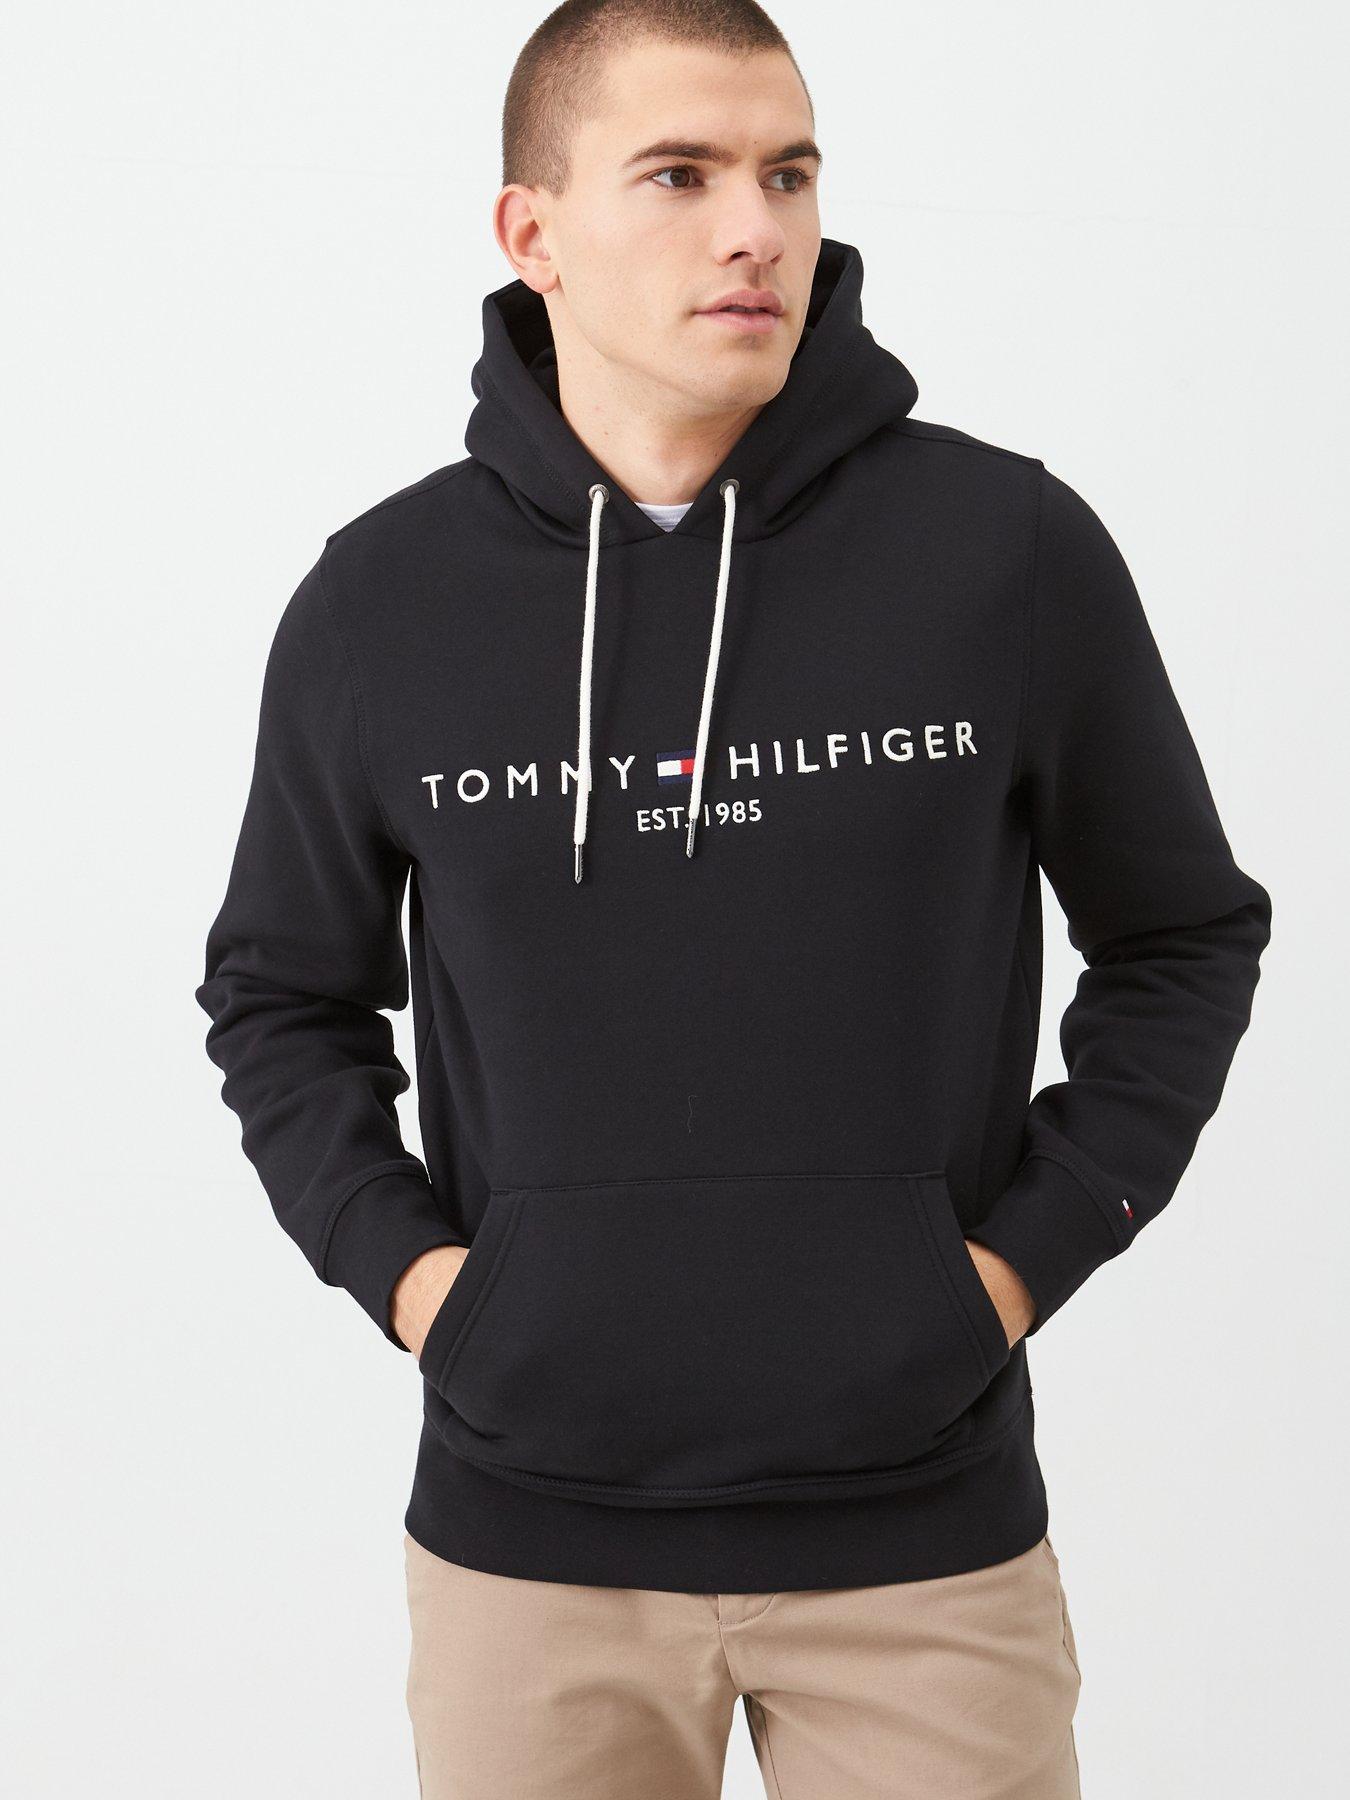 Tommy | hilfiger Hoodies sweatshirts | Men &